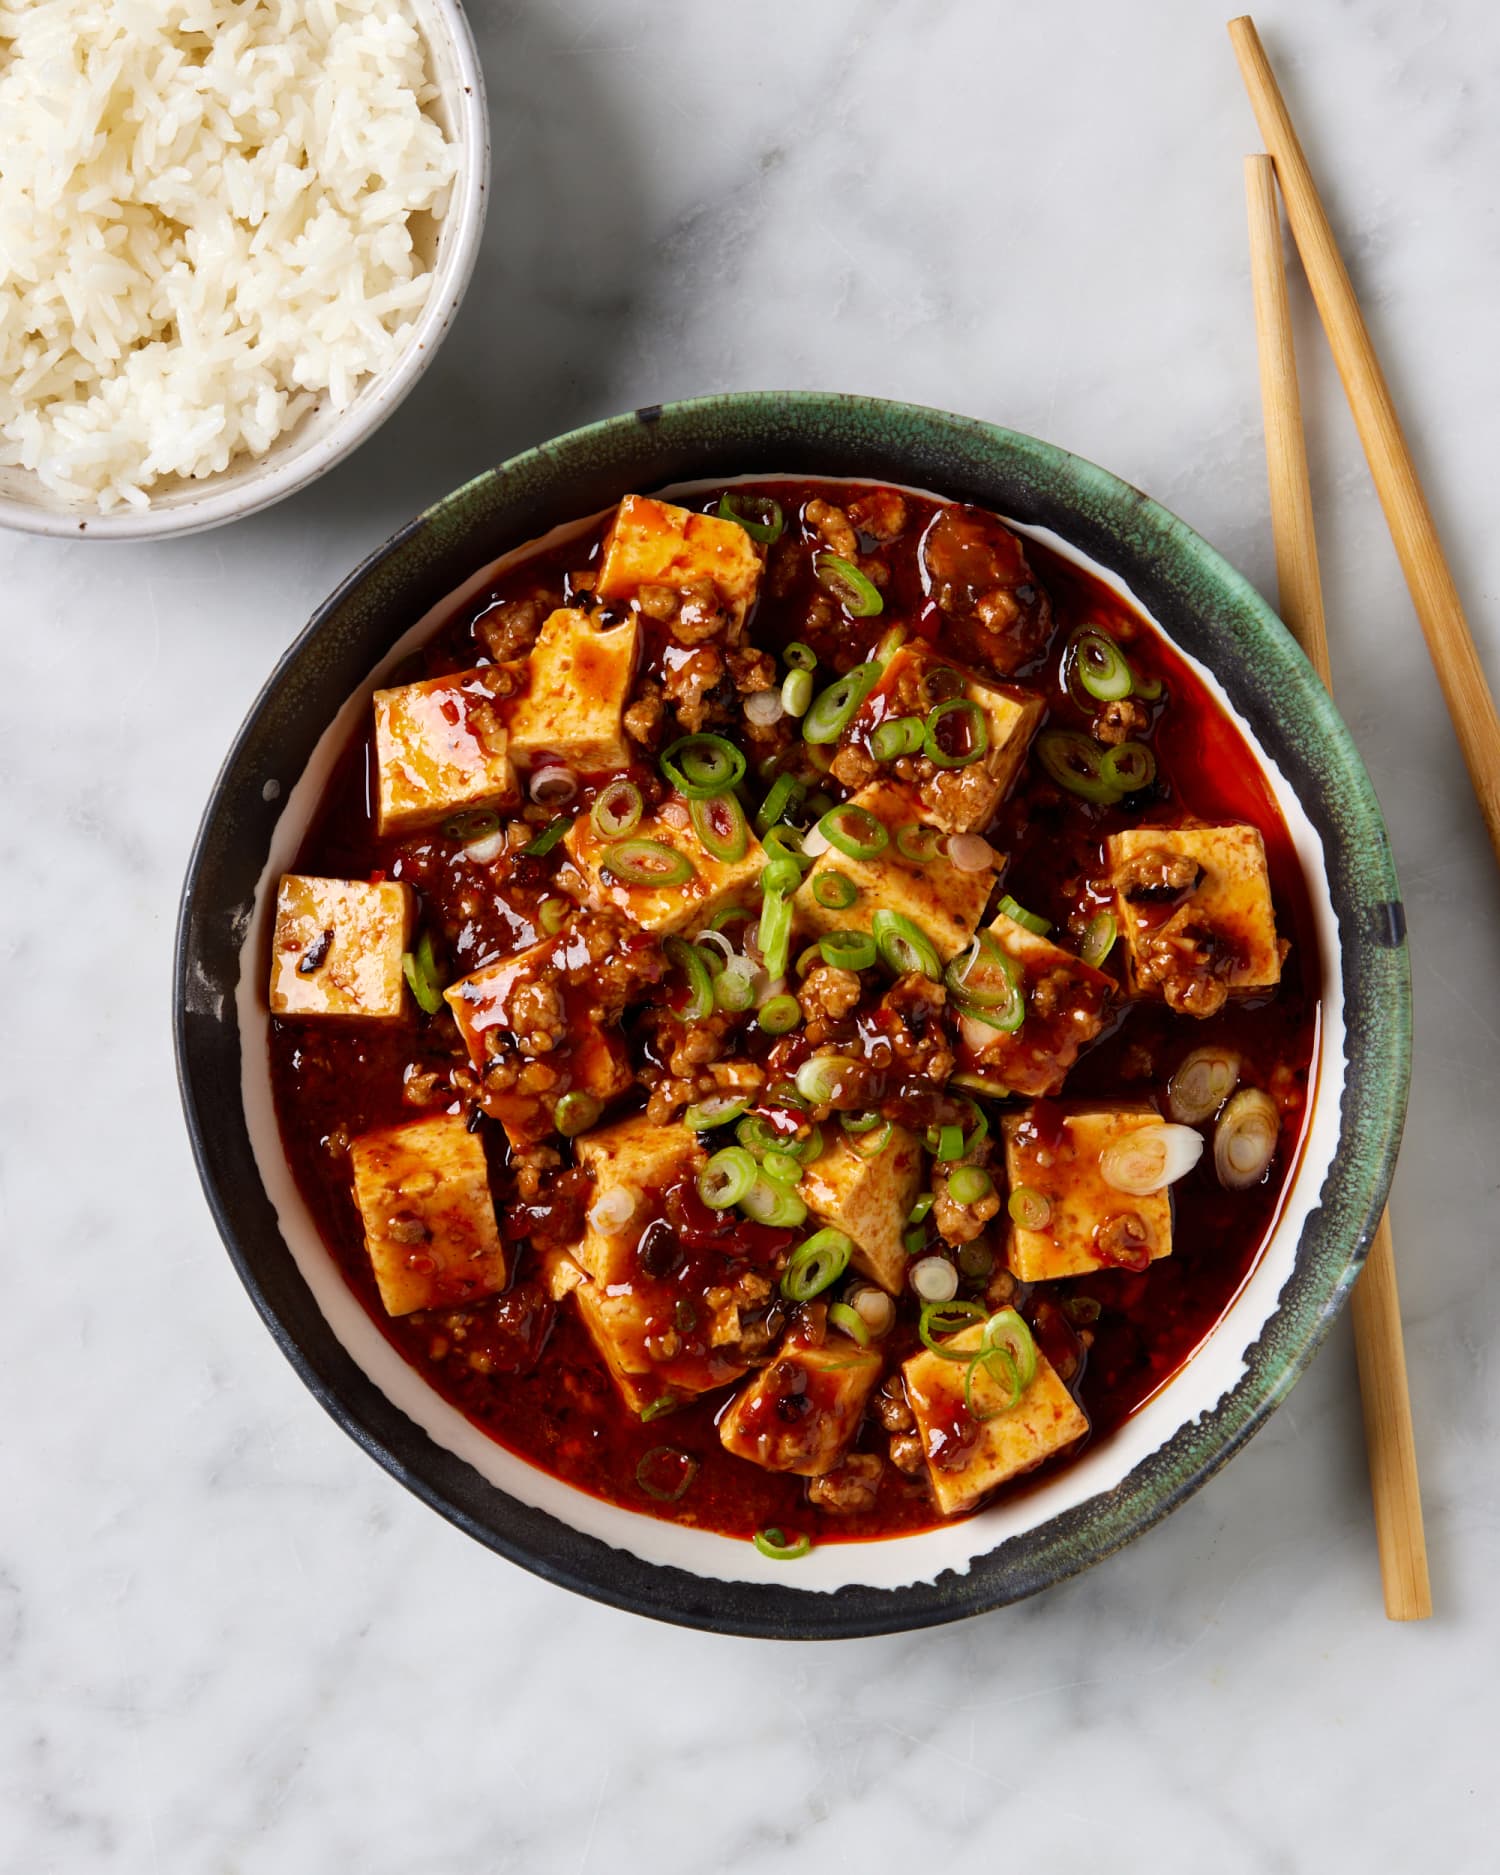 My Family’s Beloved Mapo Tofu Recipe Will Win Over Any Tofu Hater